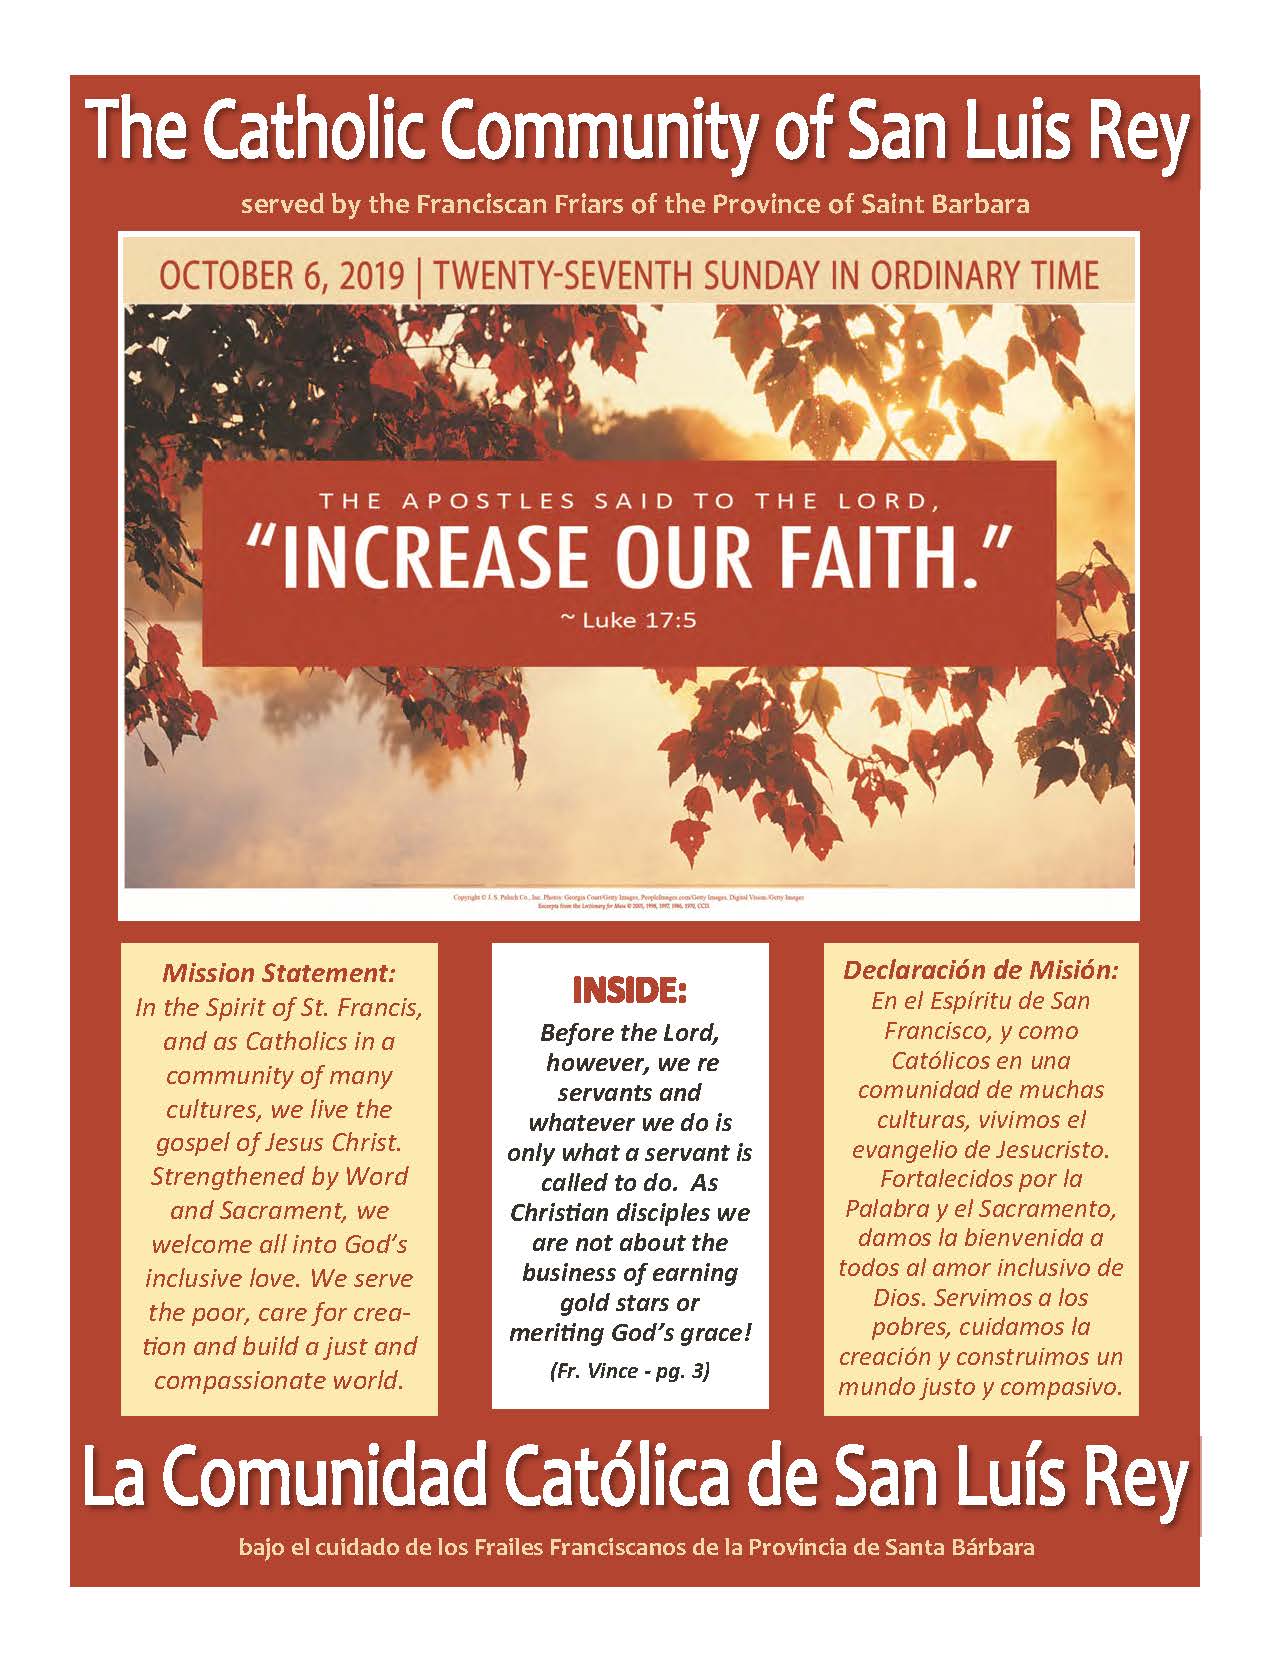 Increase Our Faith